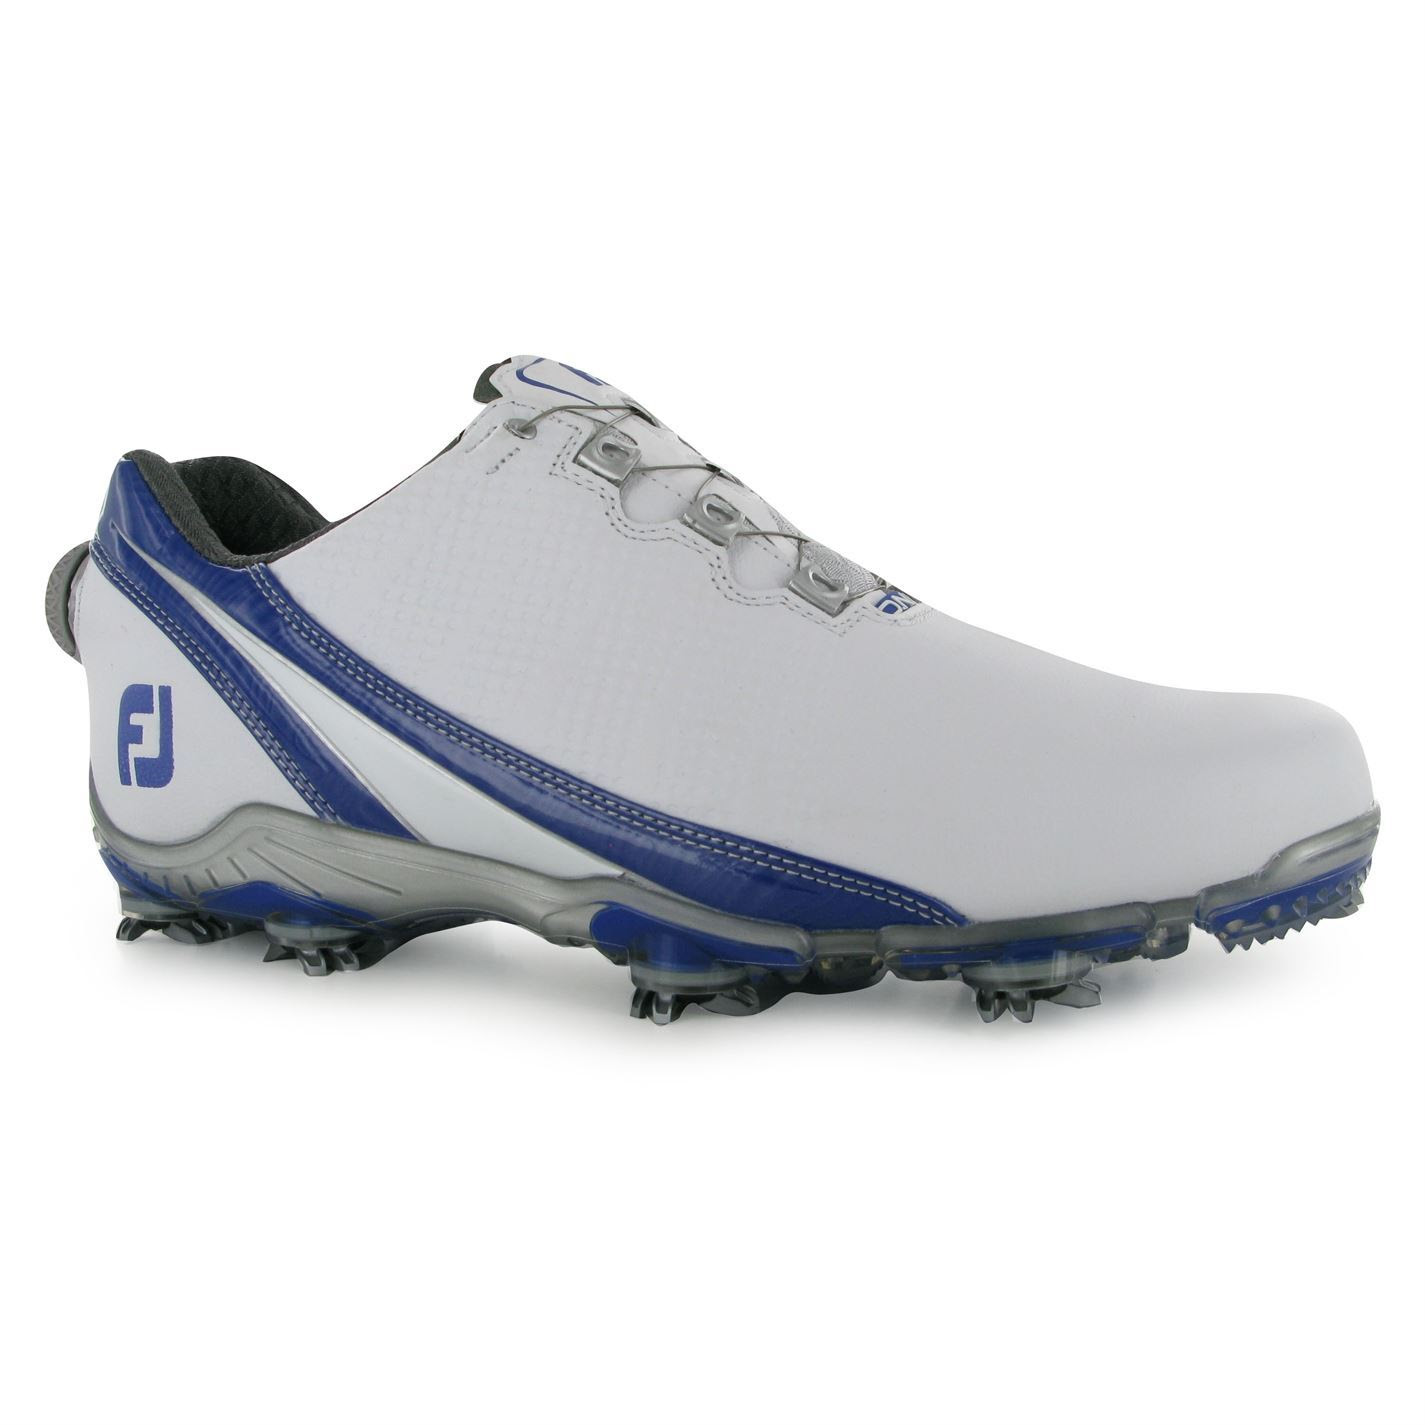 Footjoy sport golf shoes 53102